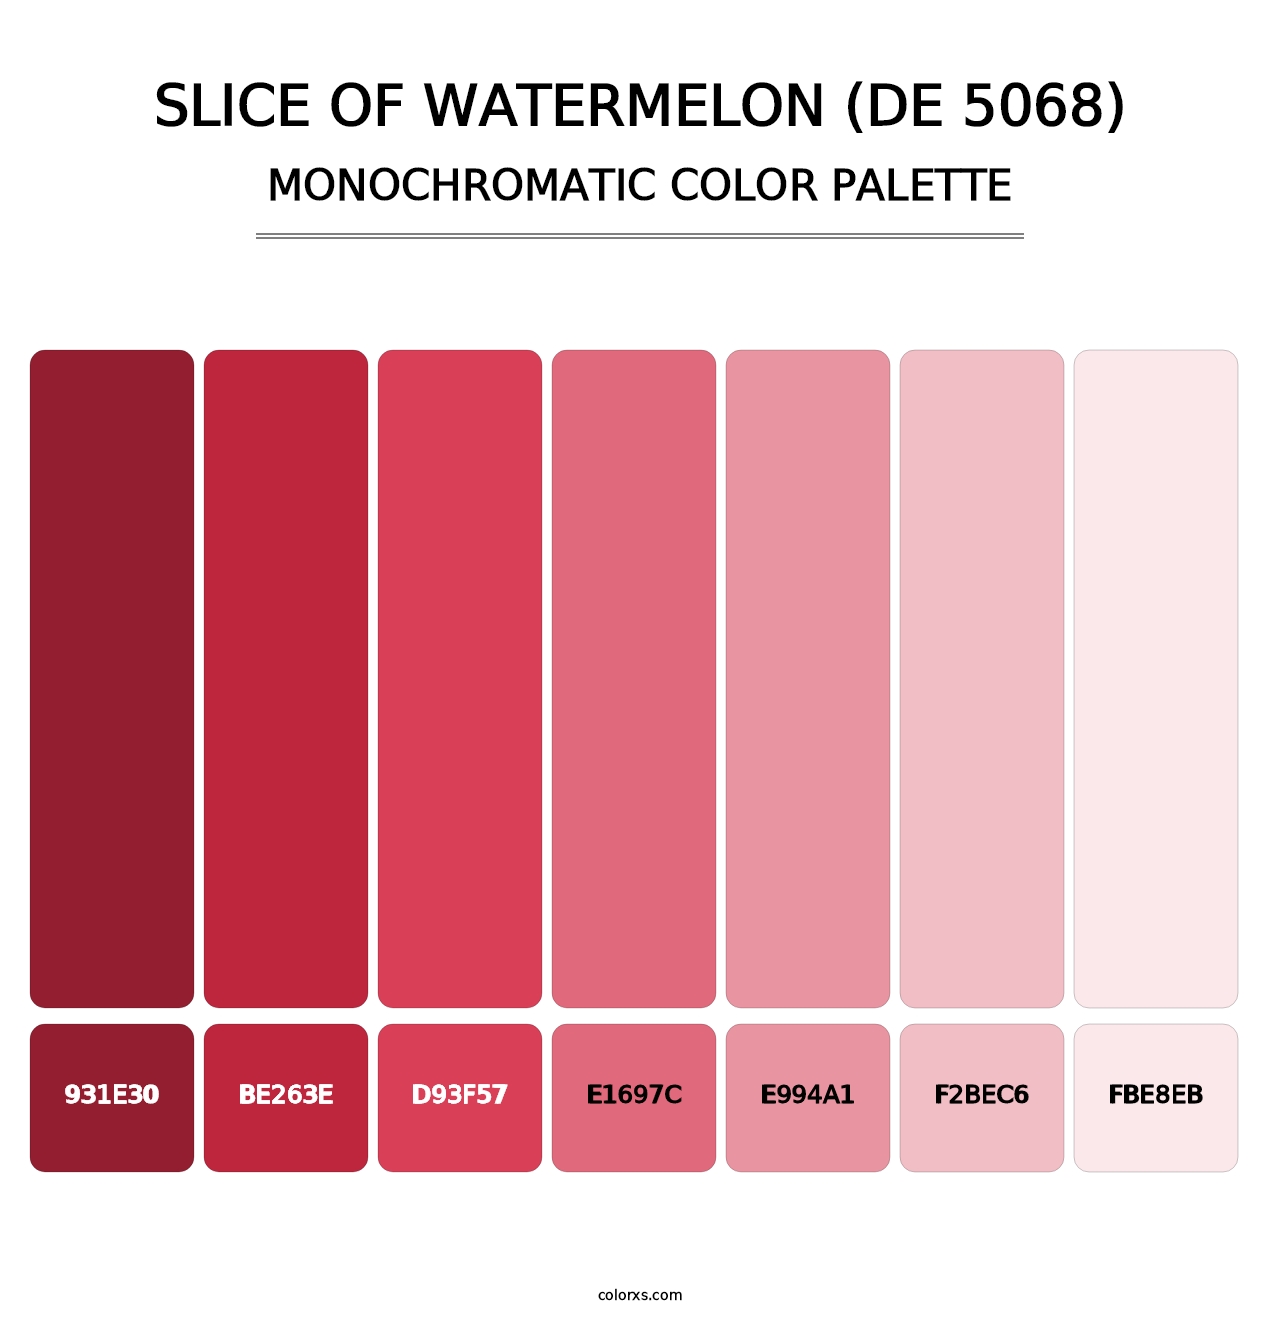 Slice of Watermelon (DE 5068) - Monochromatic Color Palette